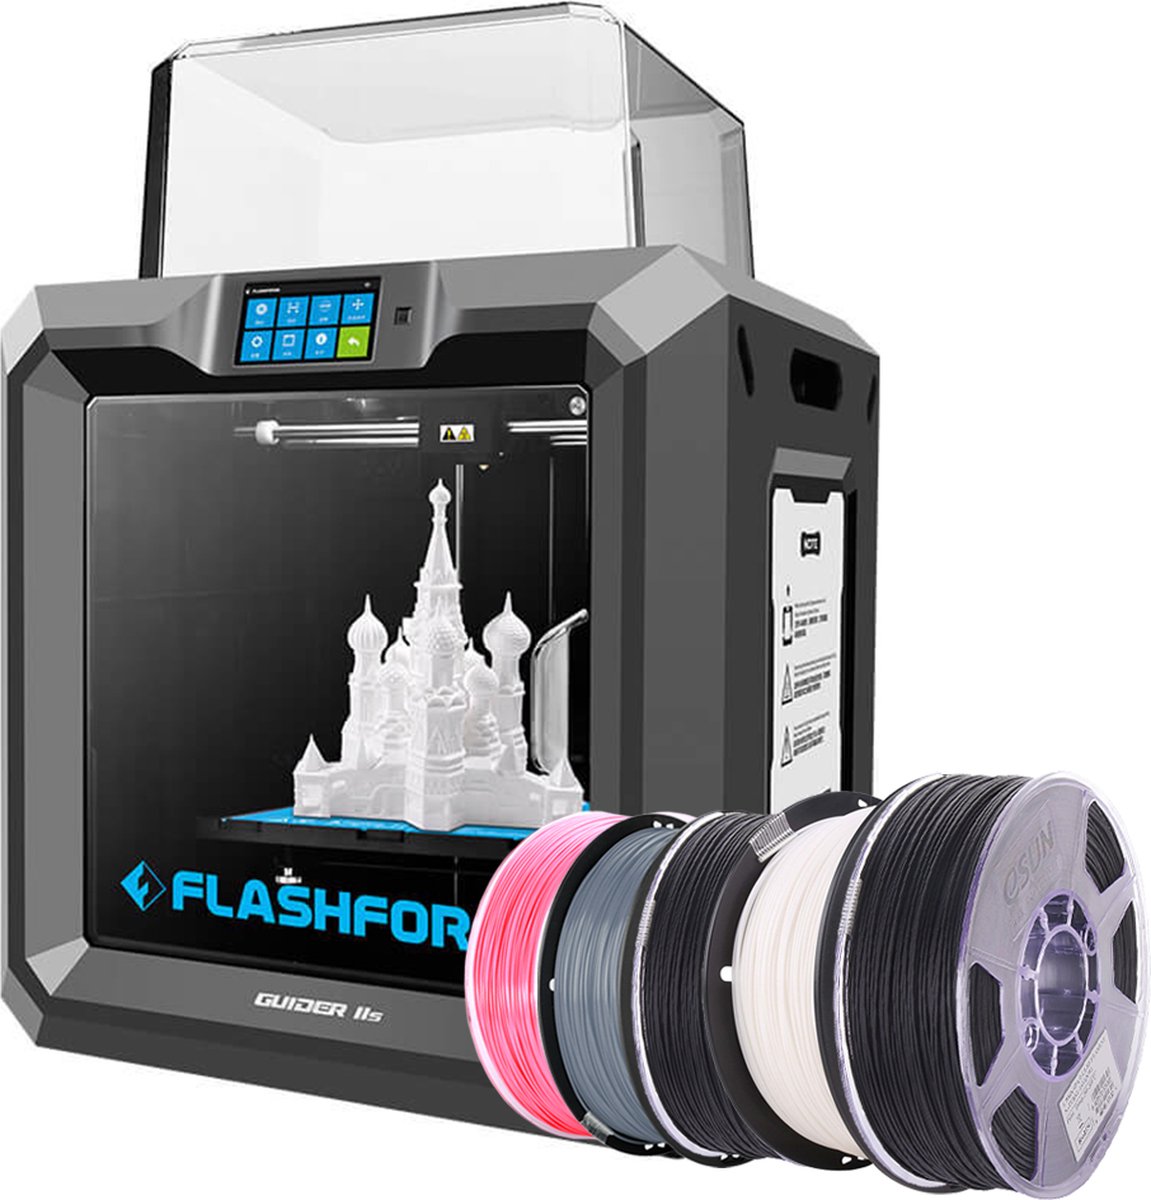 3D Printer Bundel – FlashForge – Guider 2S Pack